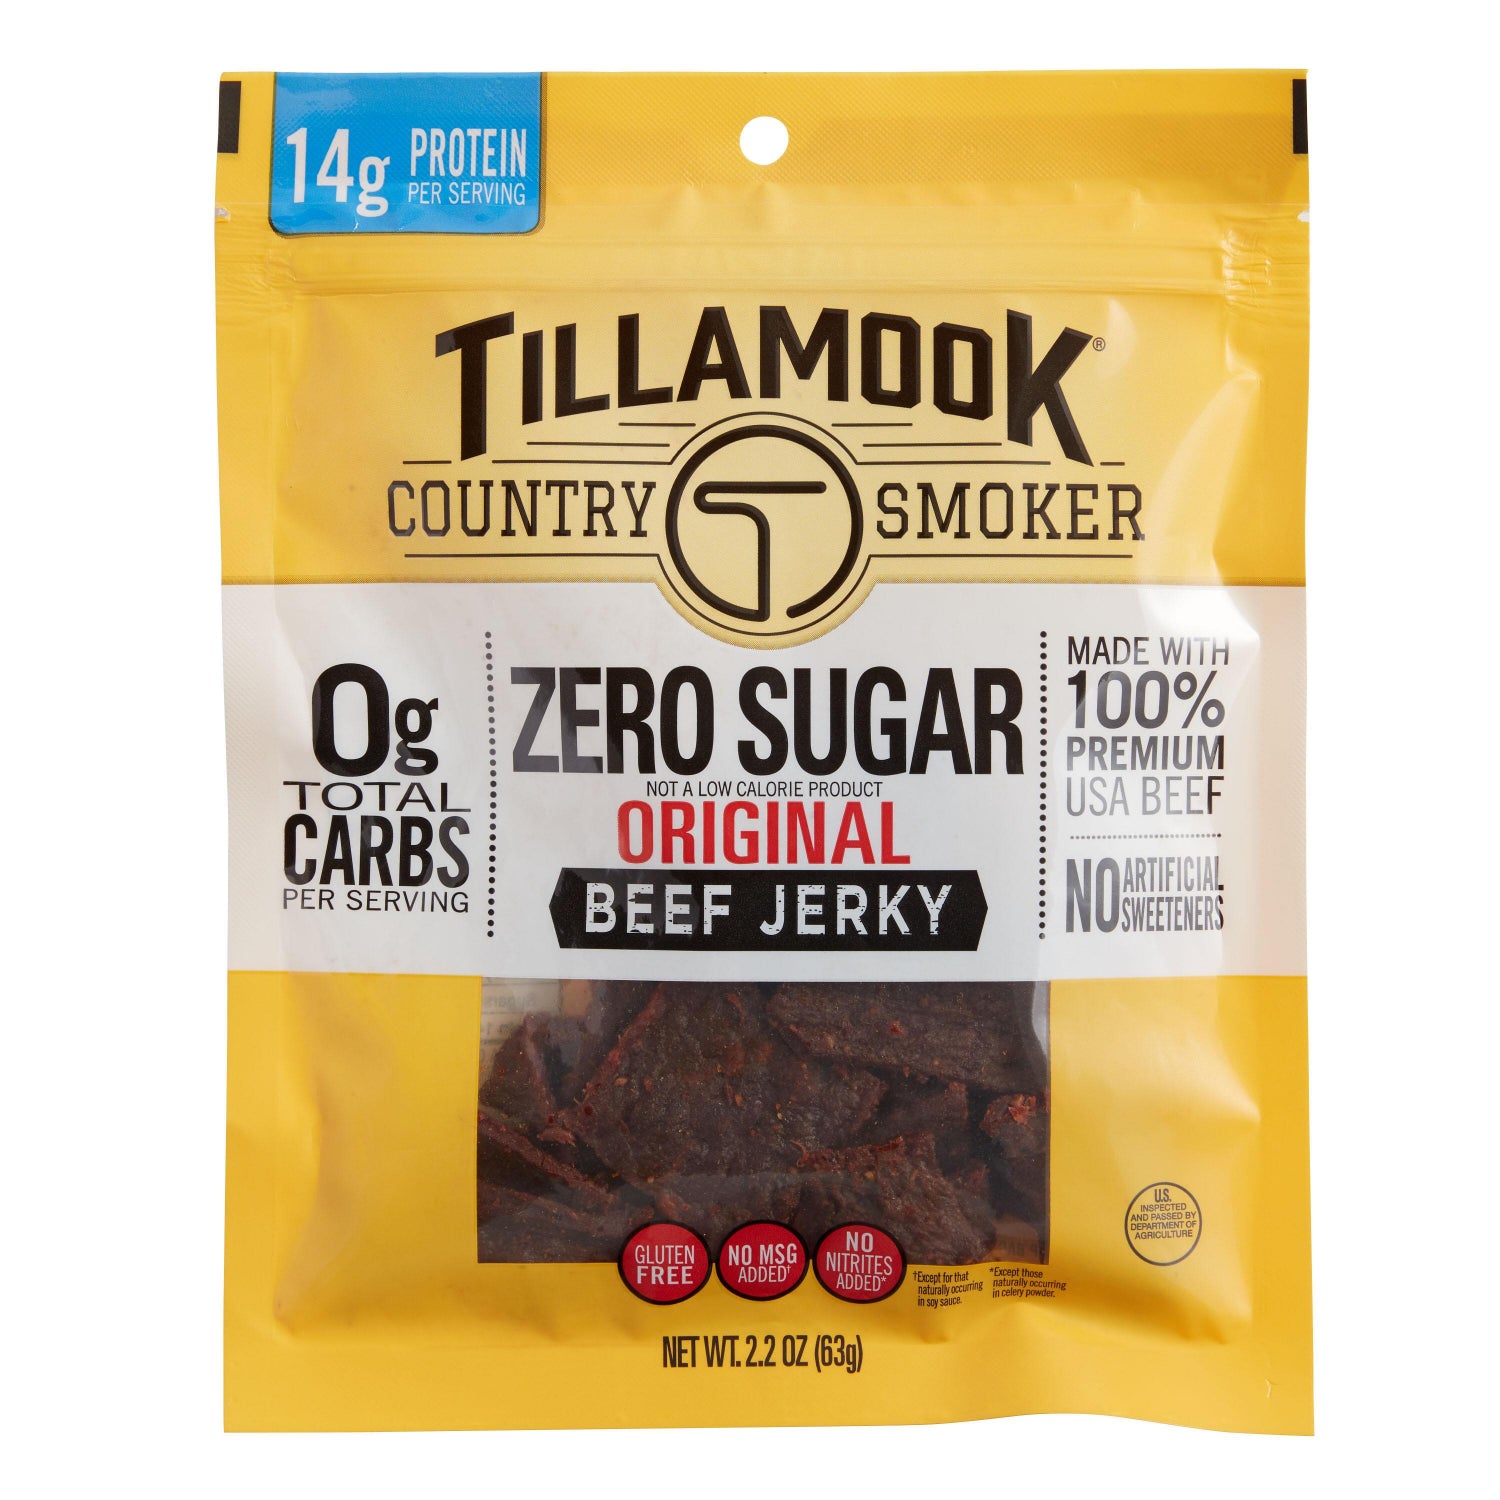 Tillamook country smoker jerky